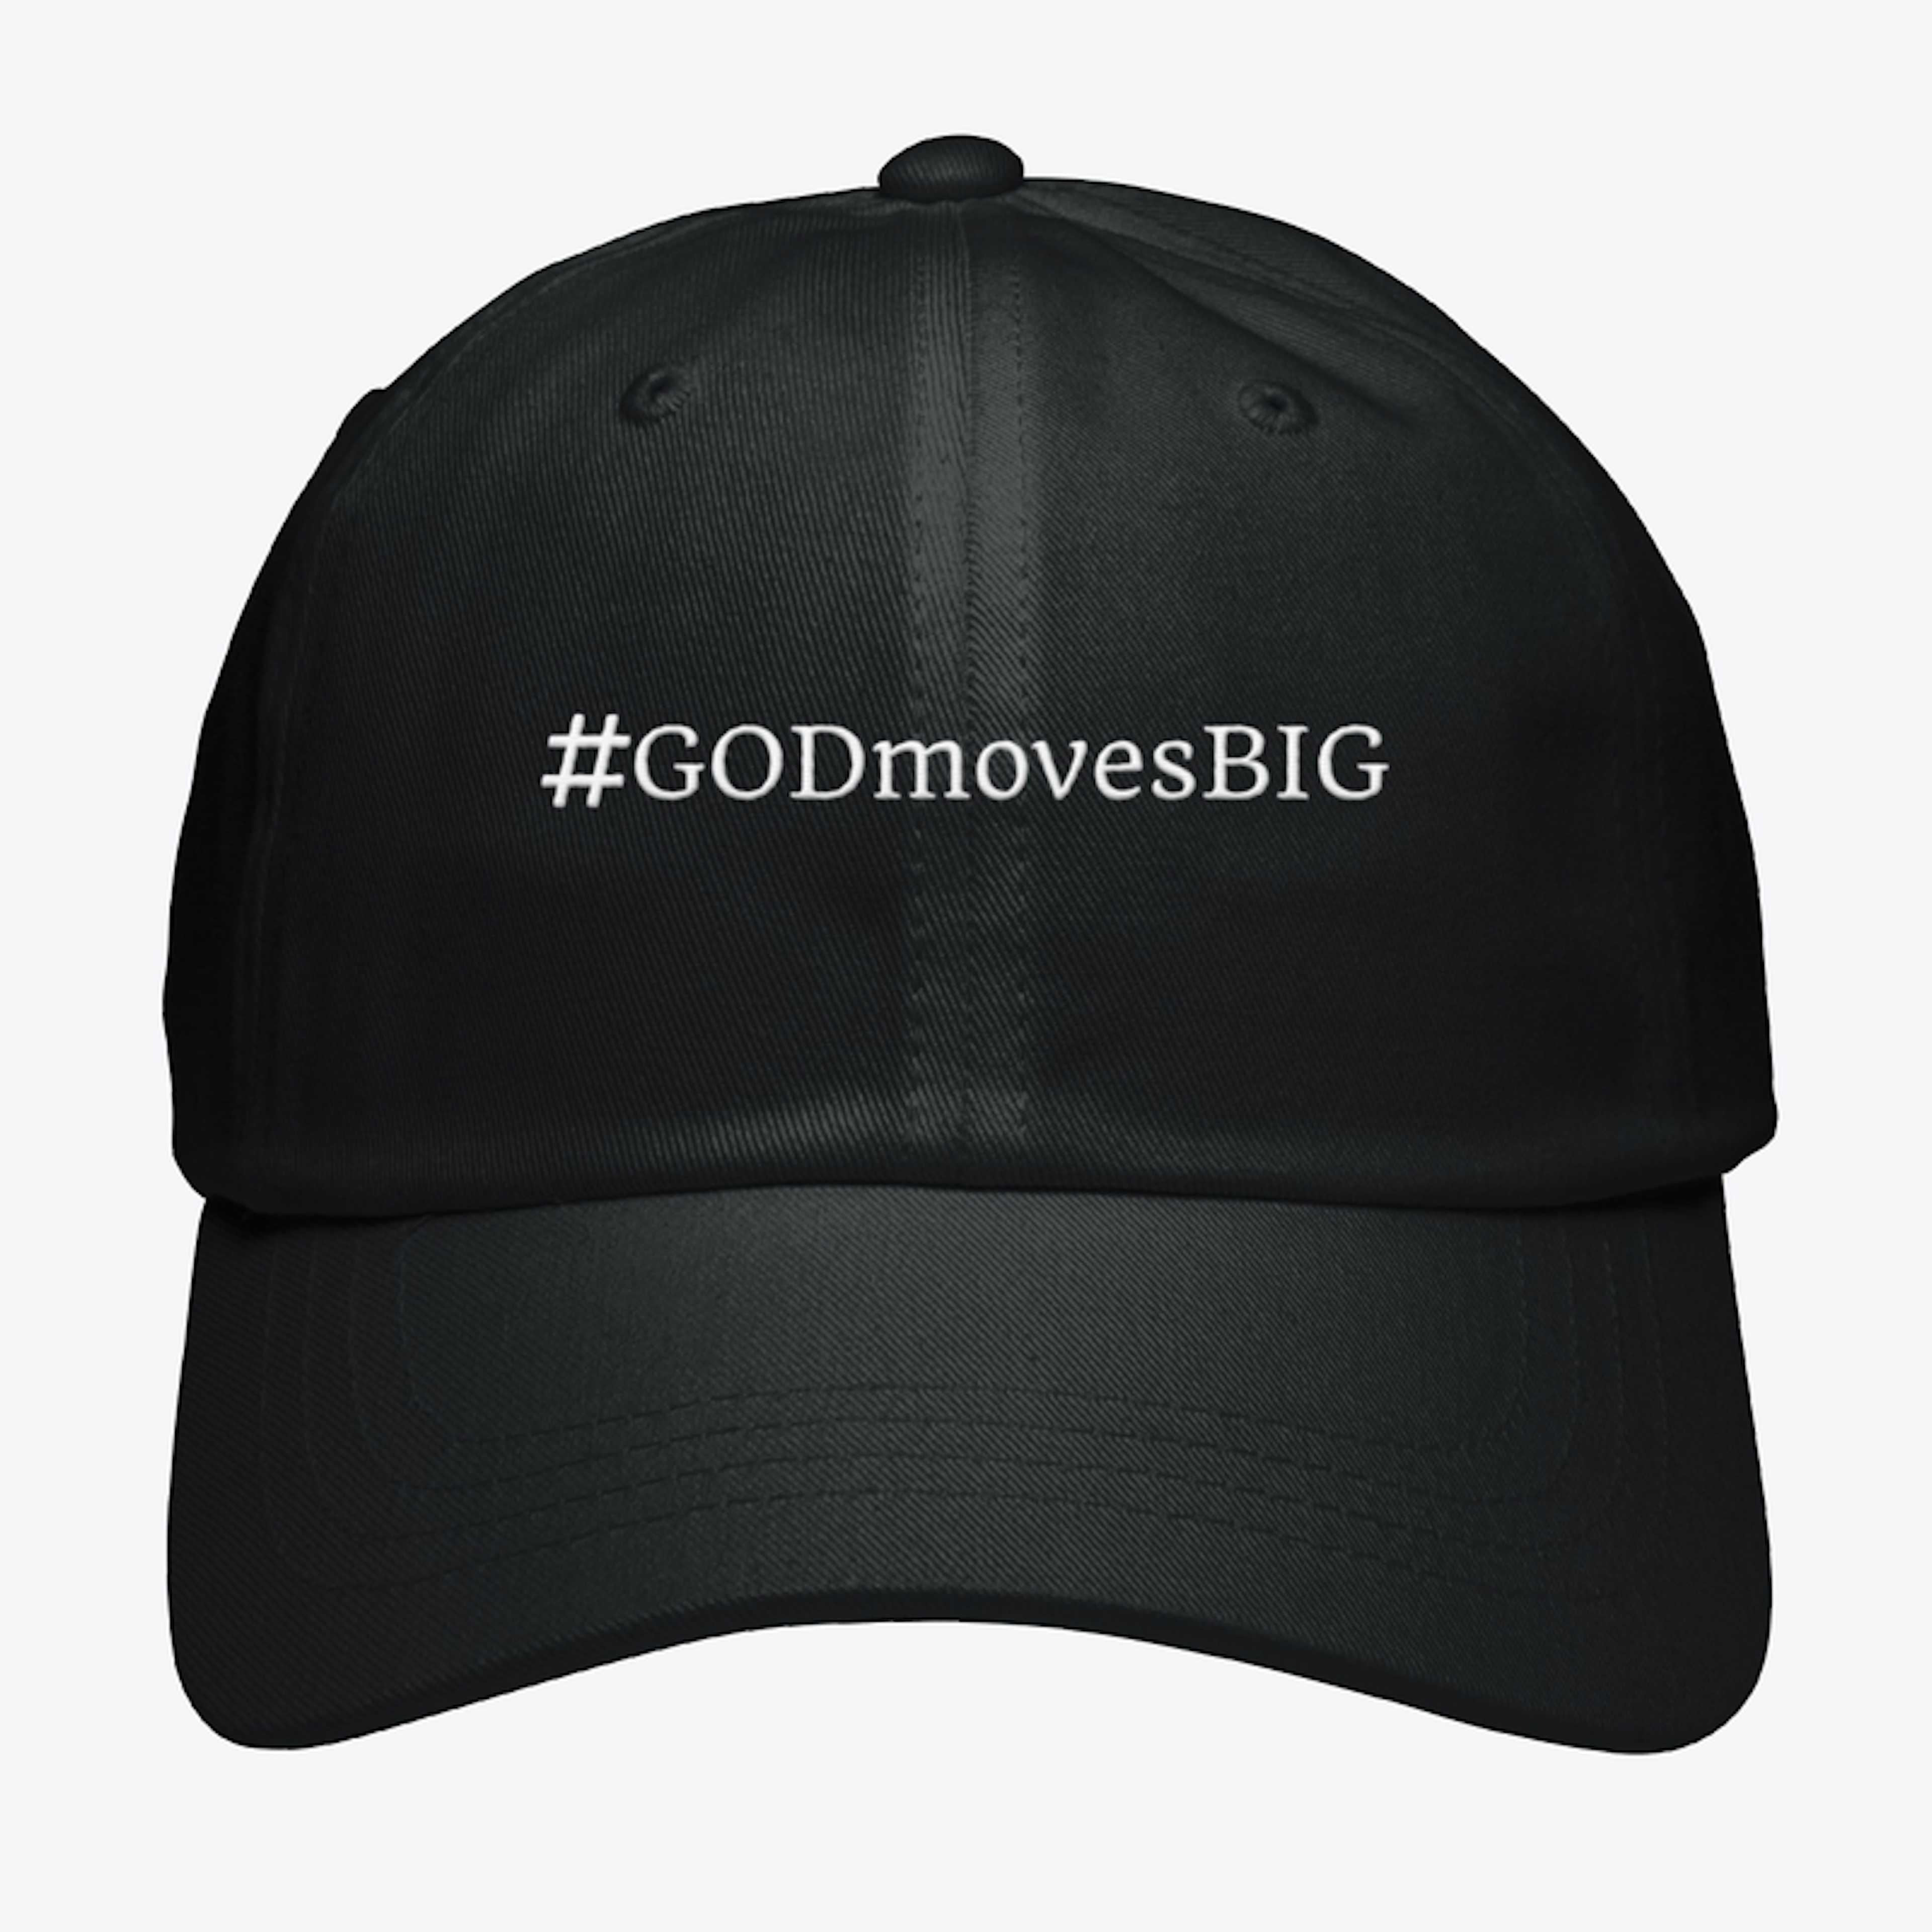 GOD moves BIG! Hat